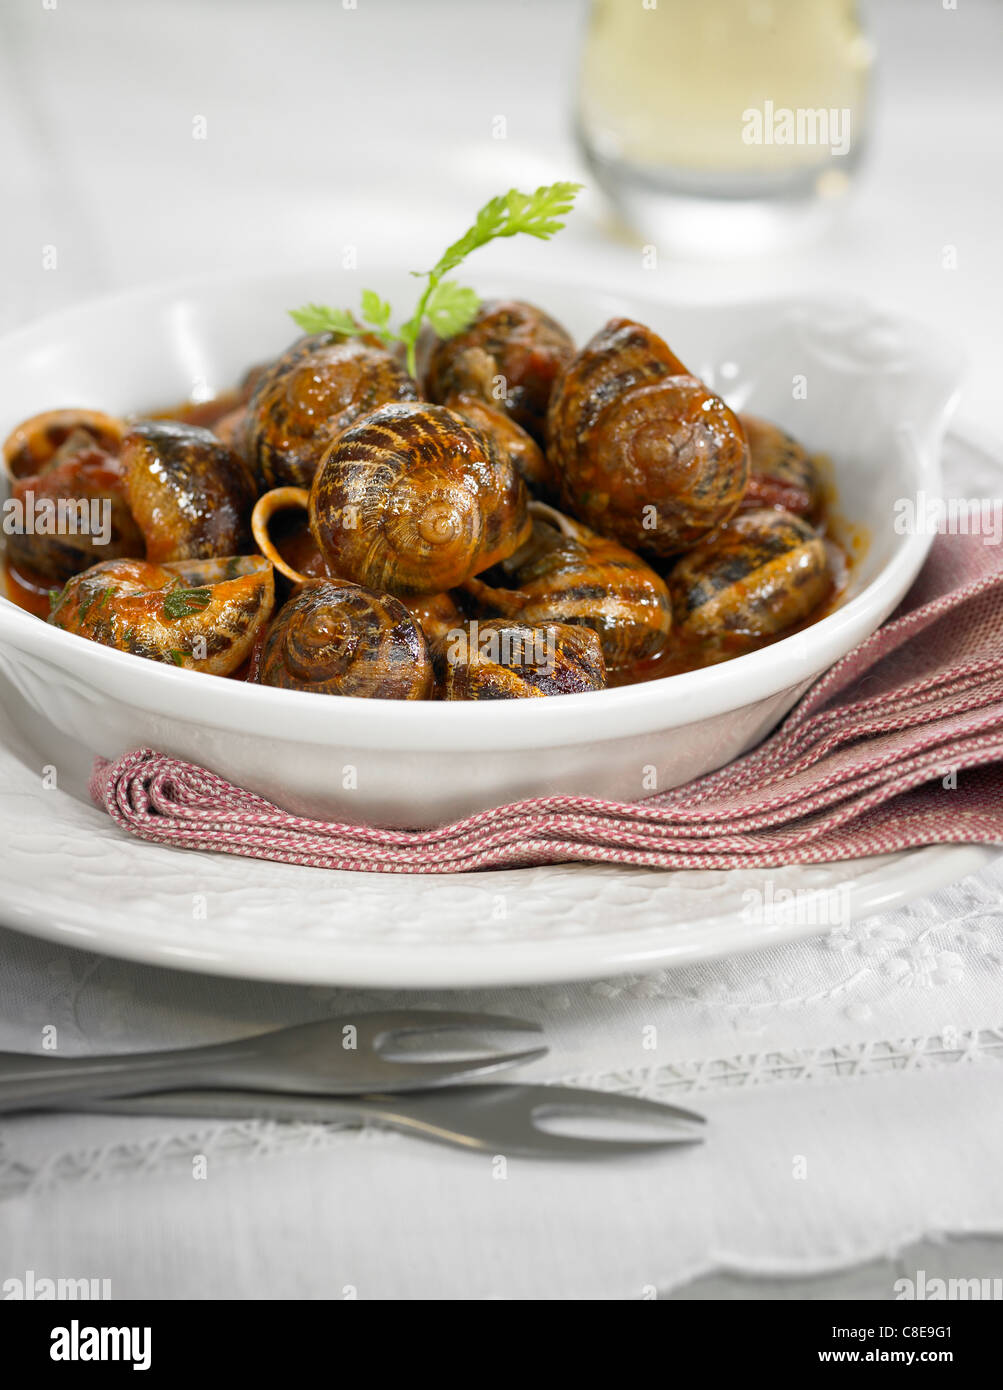 Snails in tomato sauce Stock Photo